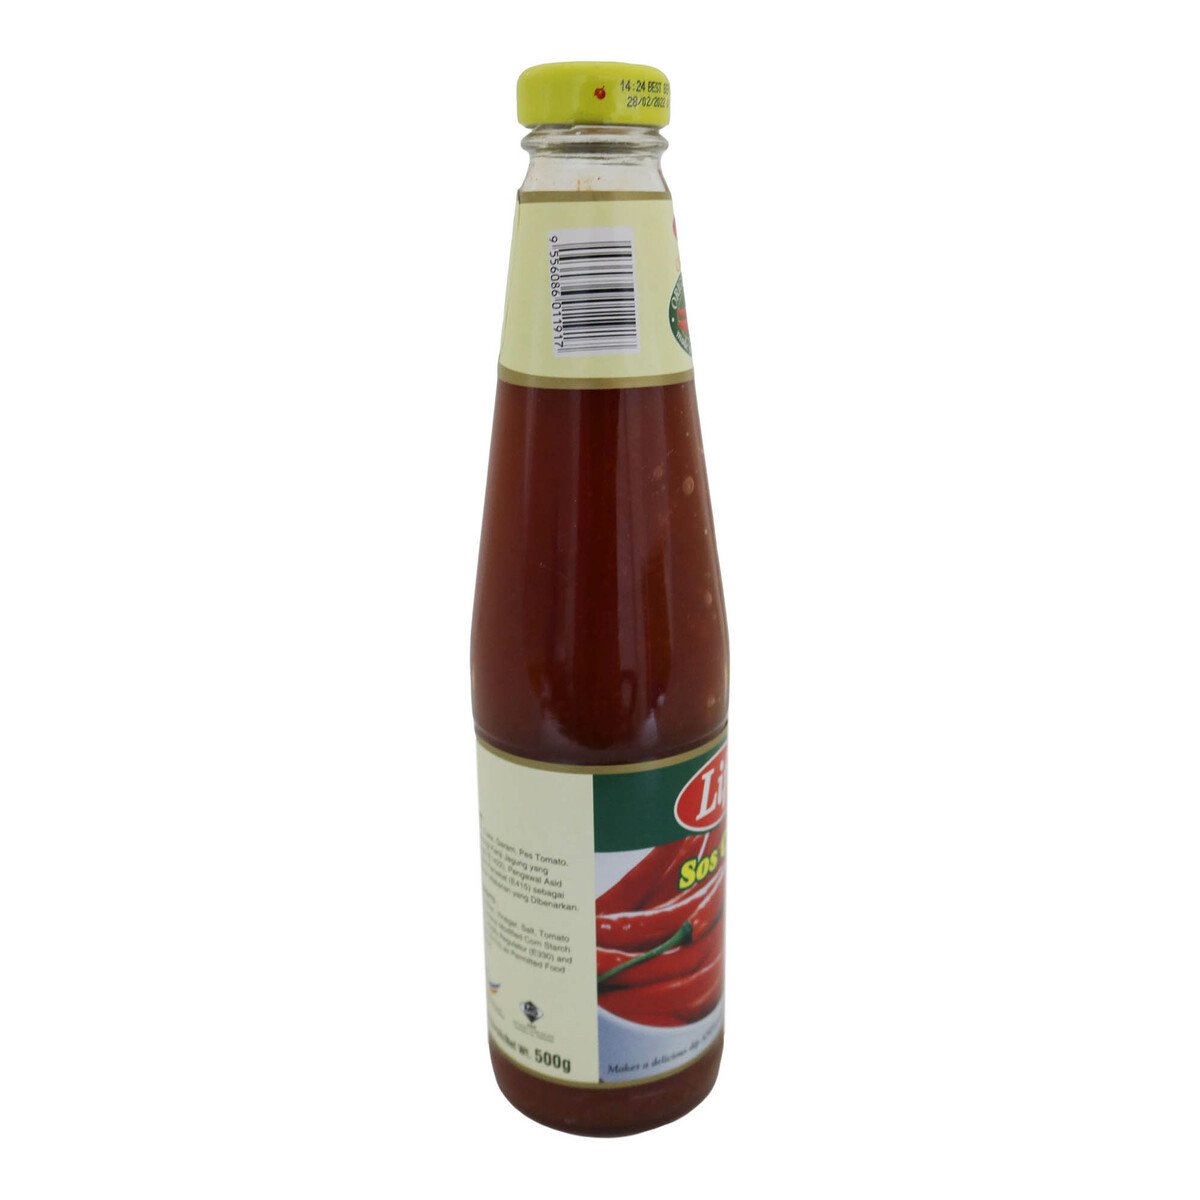 Life Chilli Sauce 500g